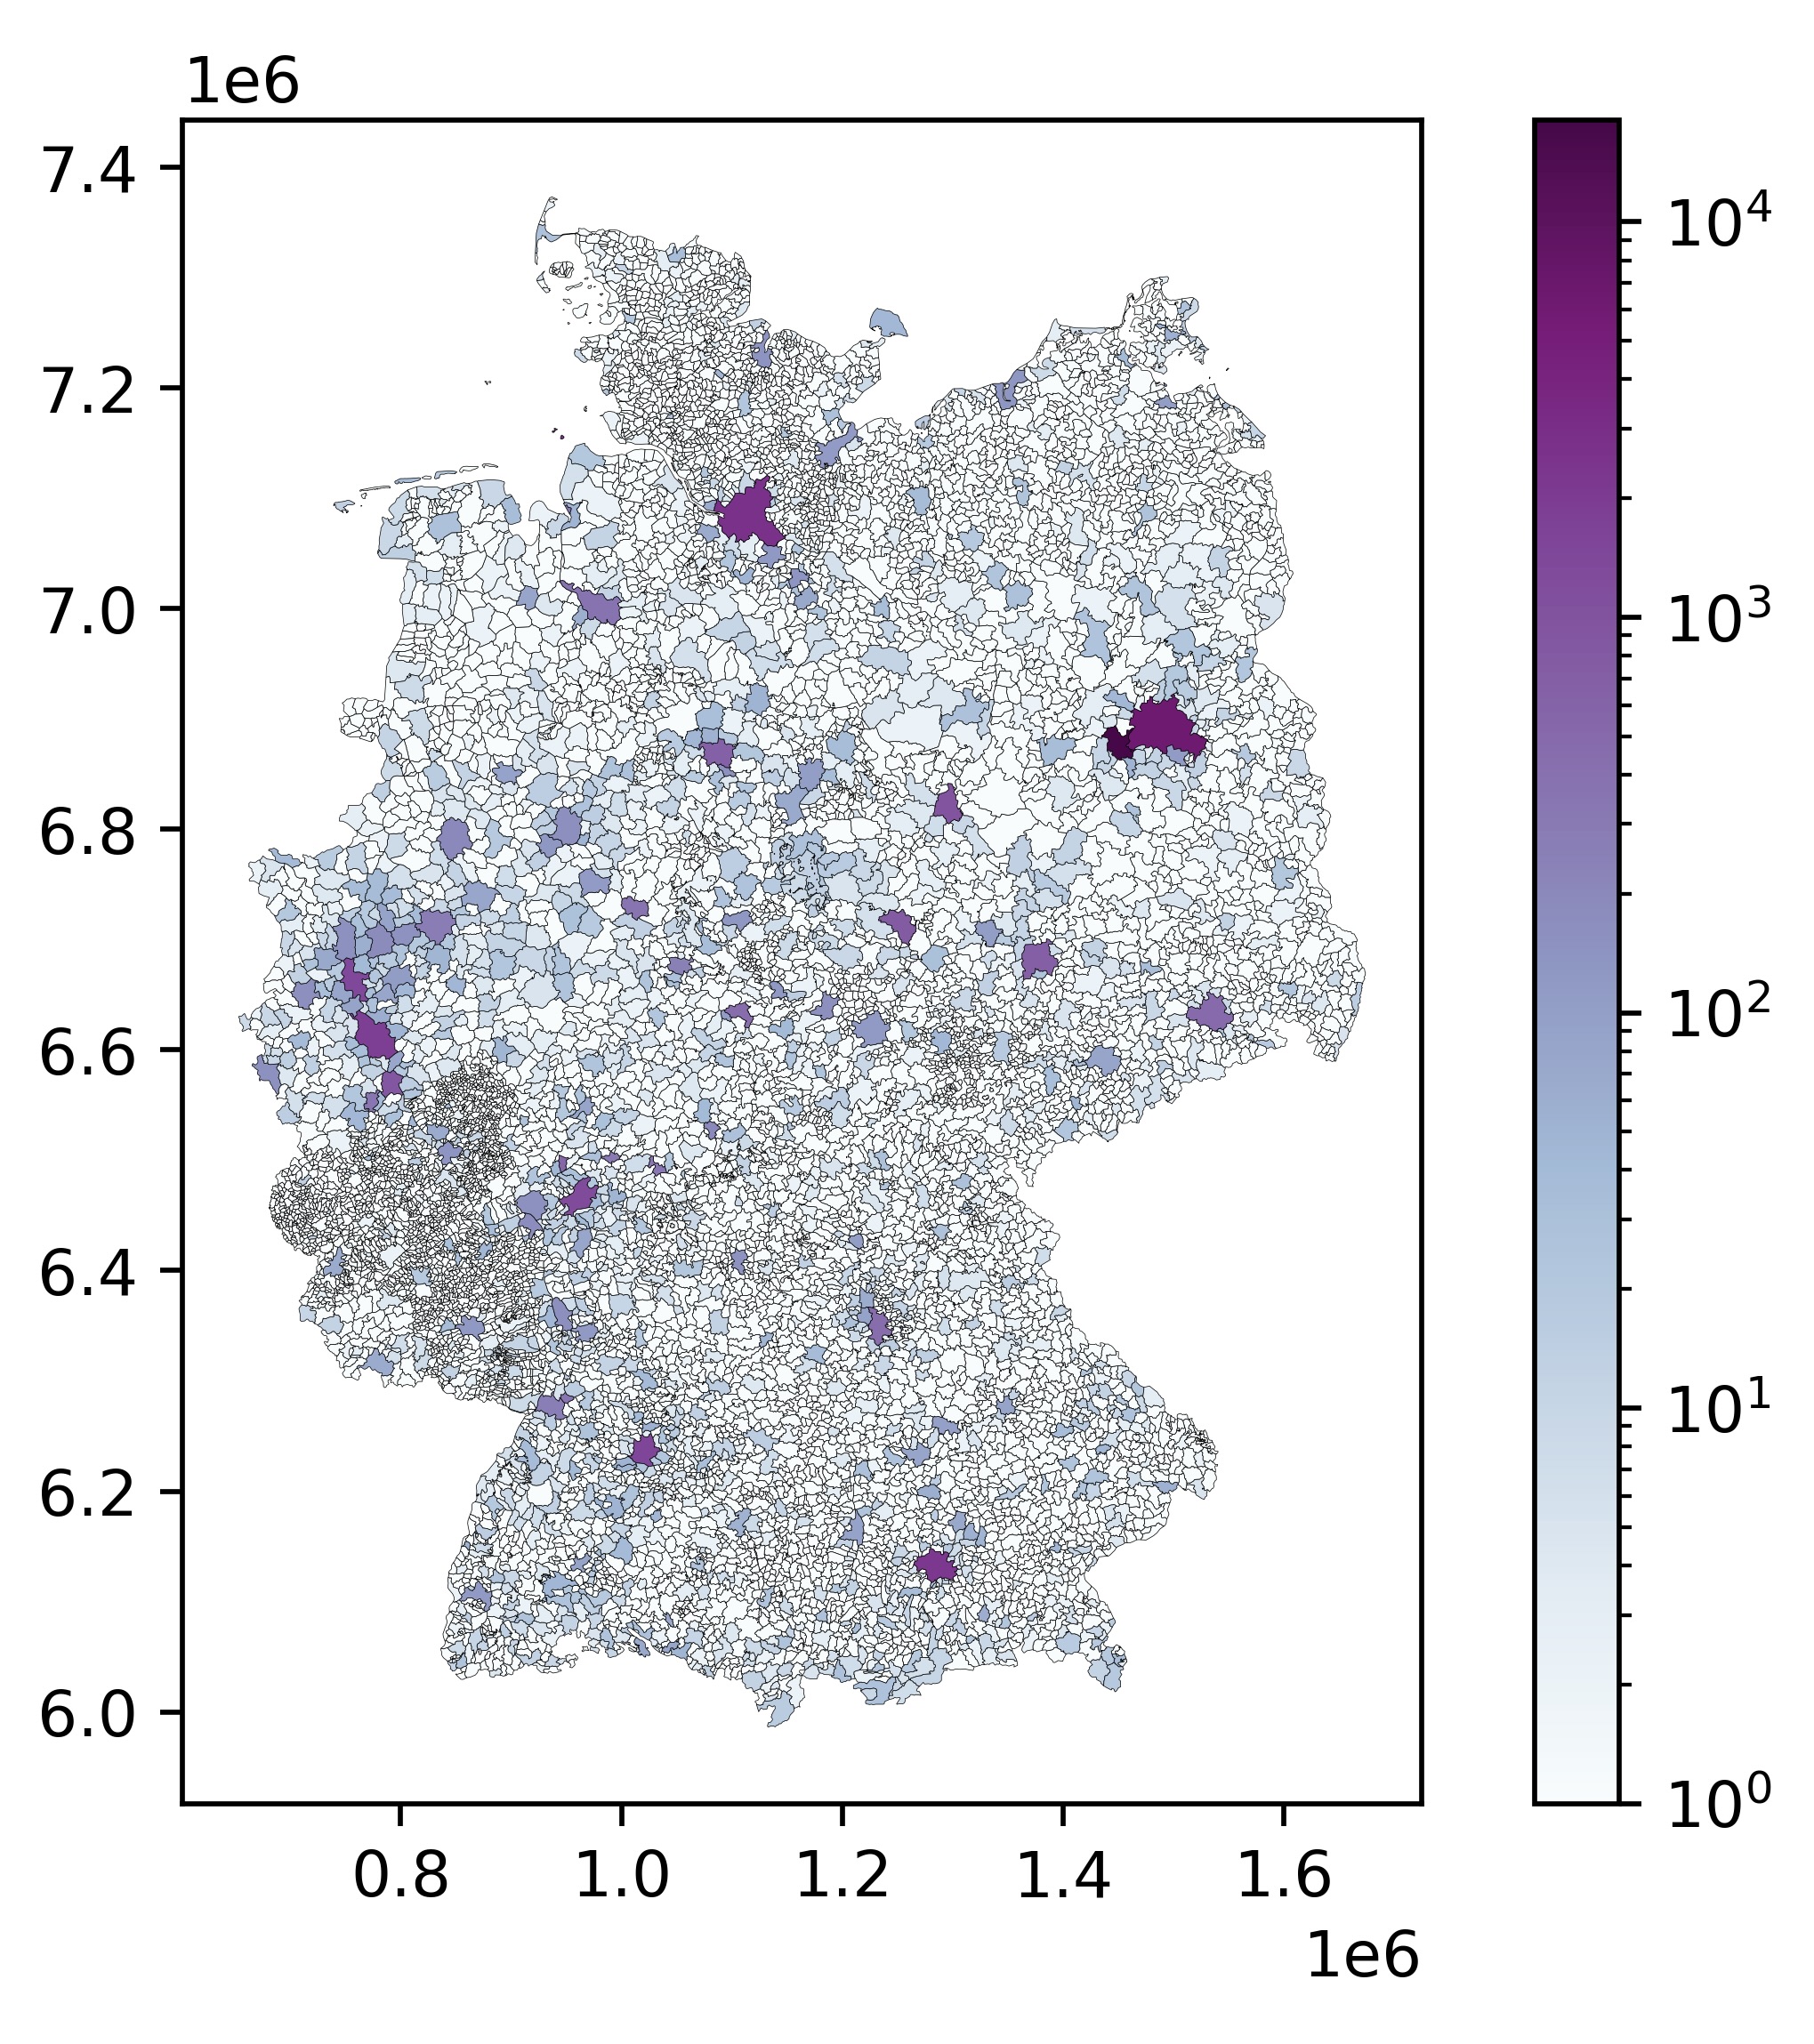 figure 3.3 Twitter usage across Germany